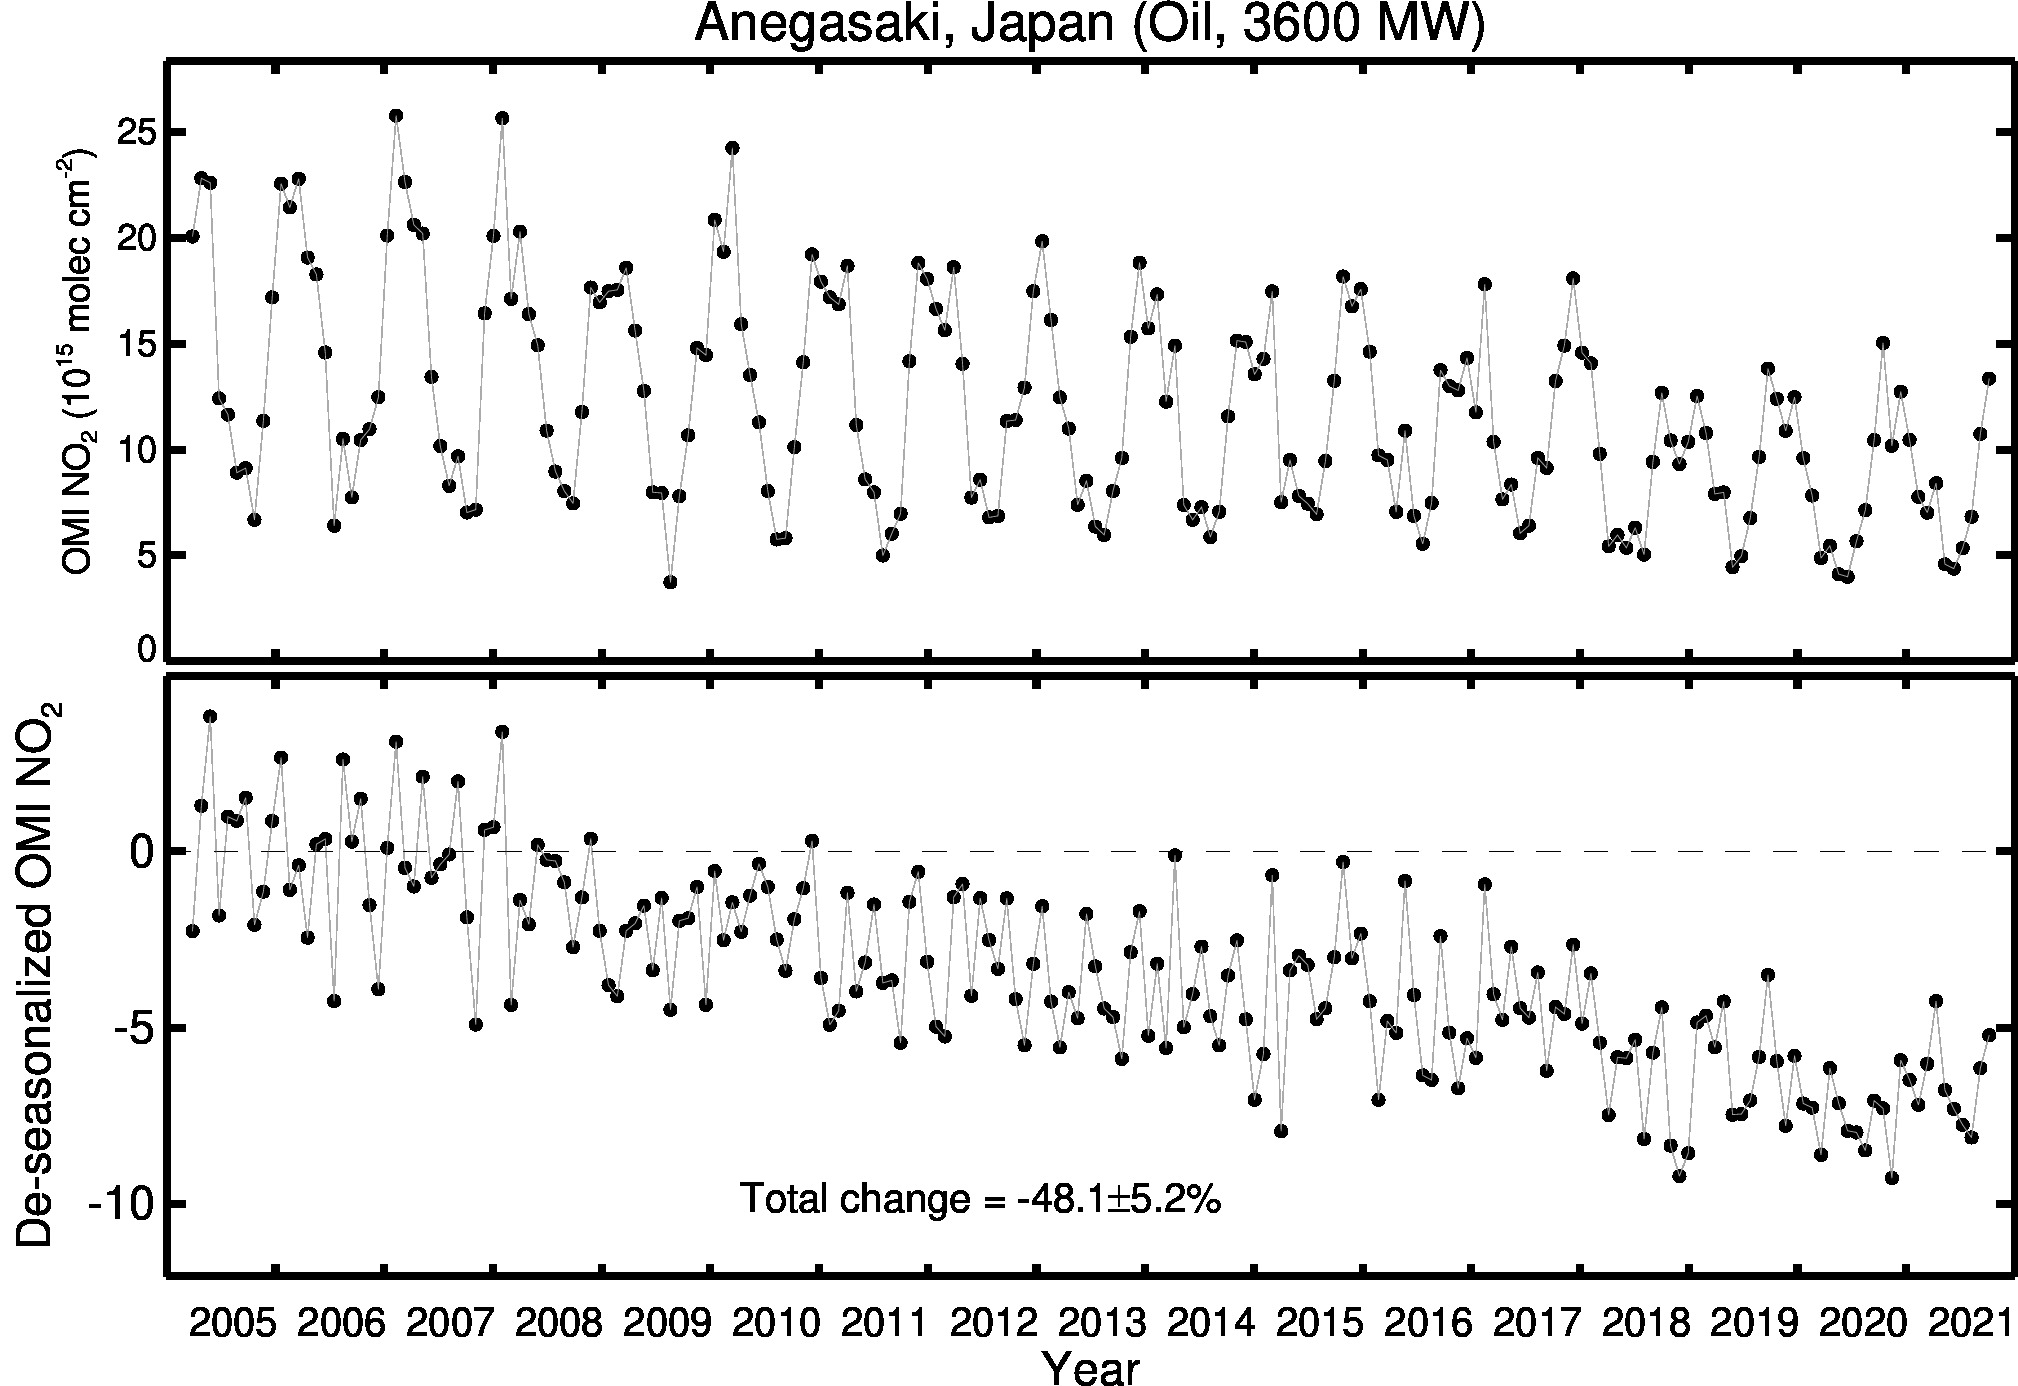 Anegasaki Line Plot 2005-2021